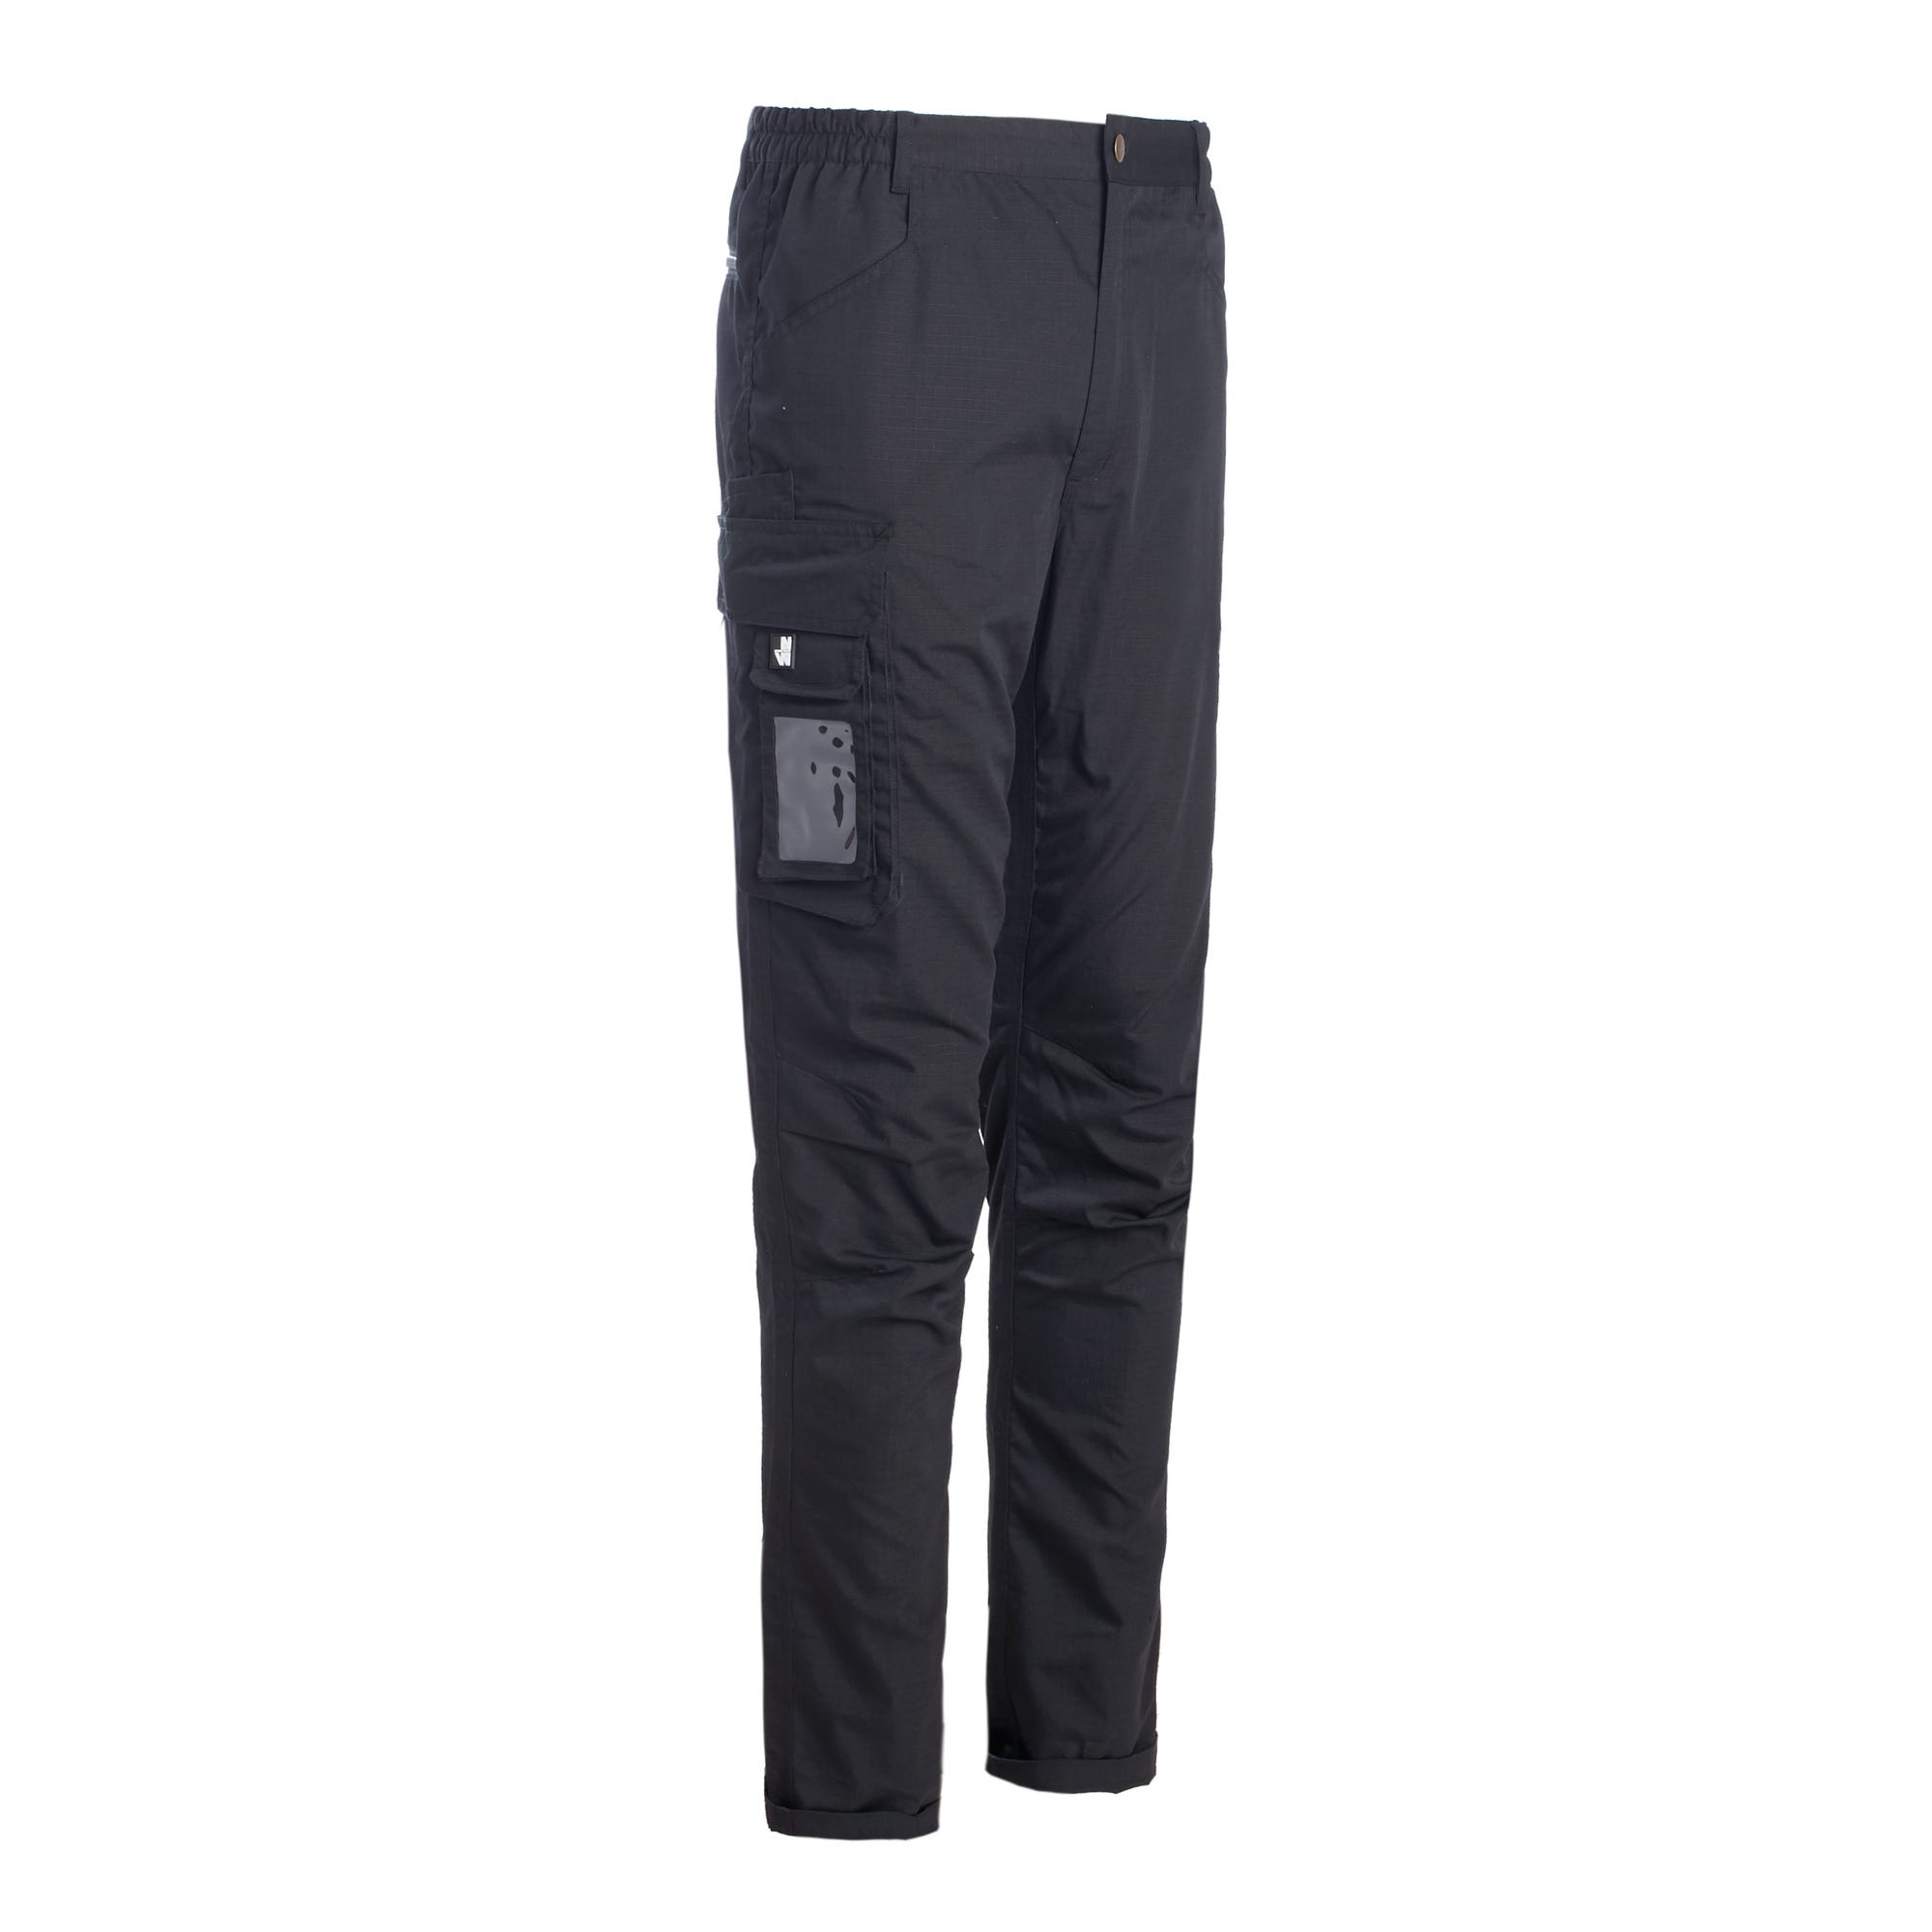 Pantalon de travail noir T.48 EDWARD - NORTH WAYS 4